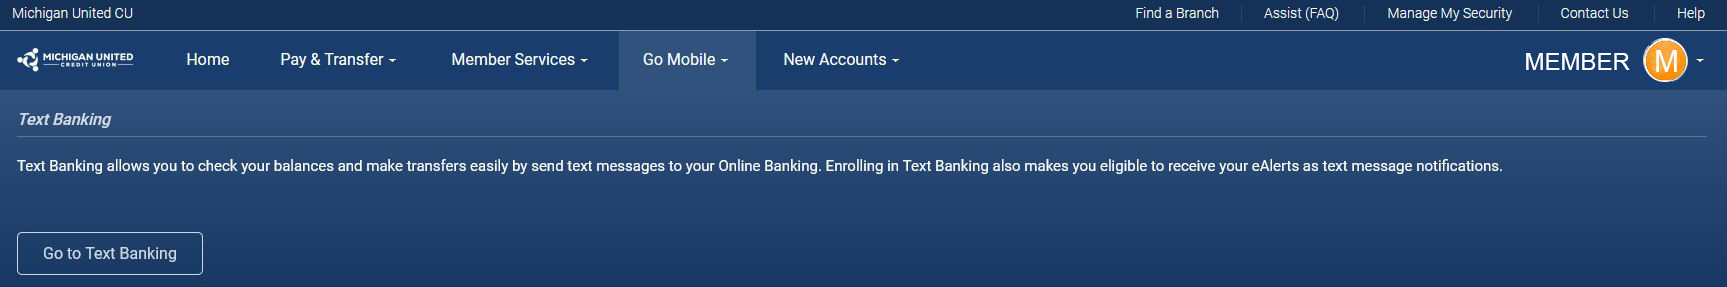 Go Mobile Tab Screenshot Online Banking